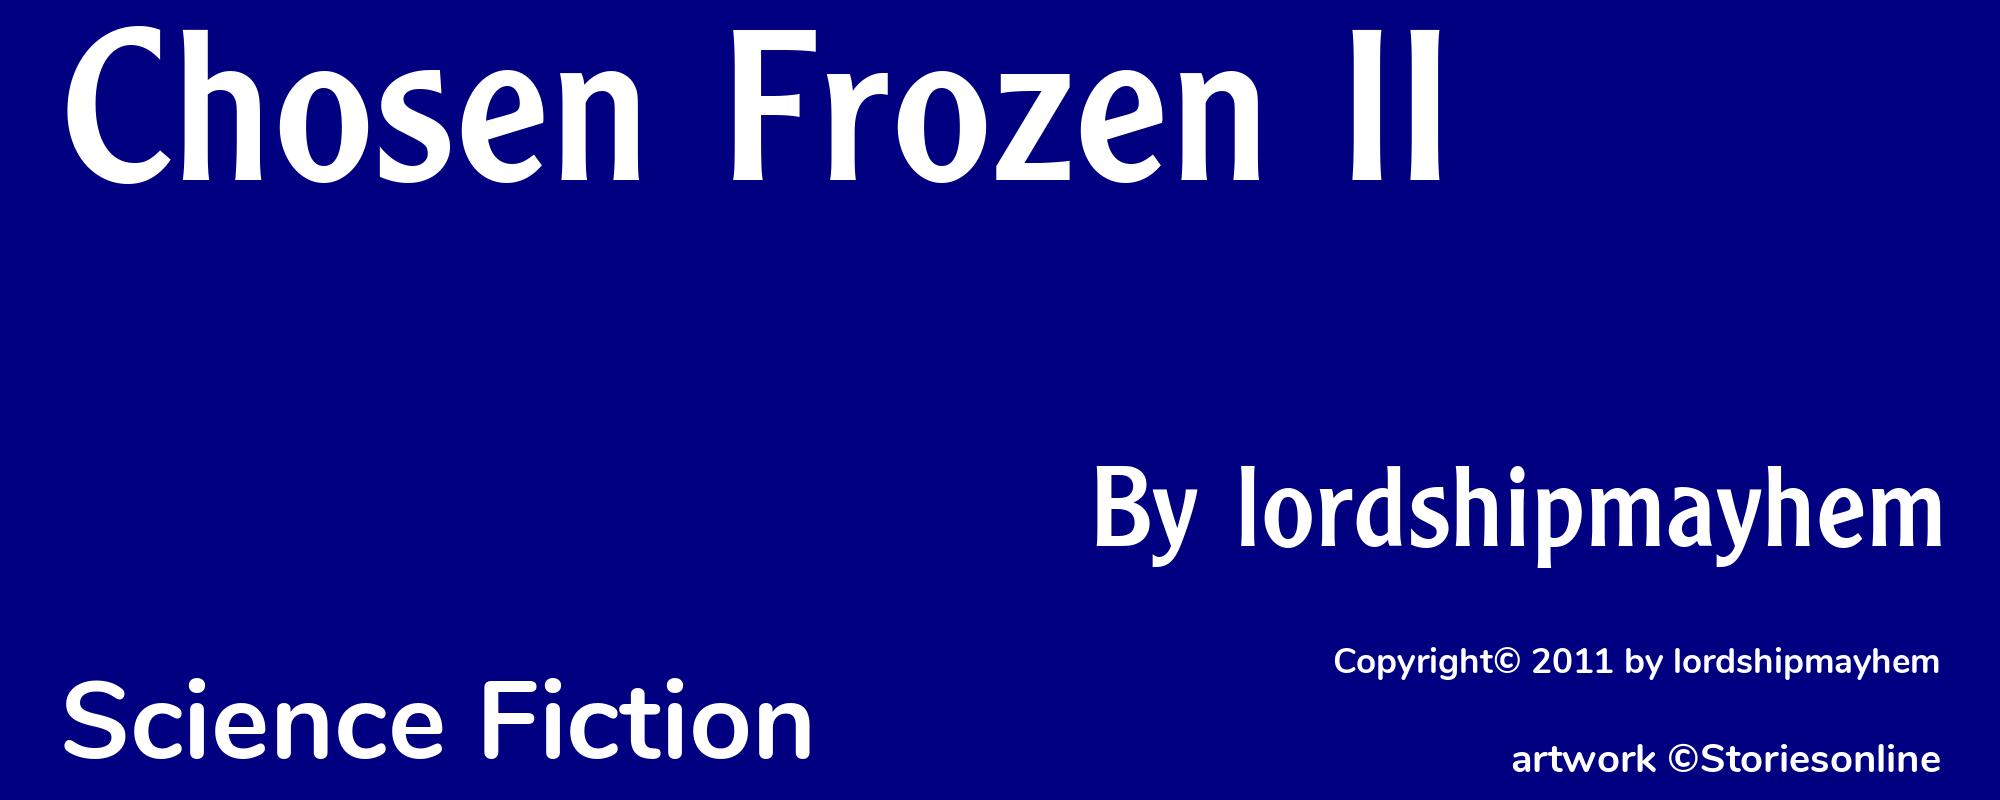 Chosen Frozen II - Cover